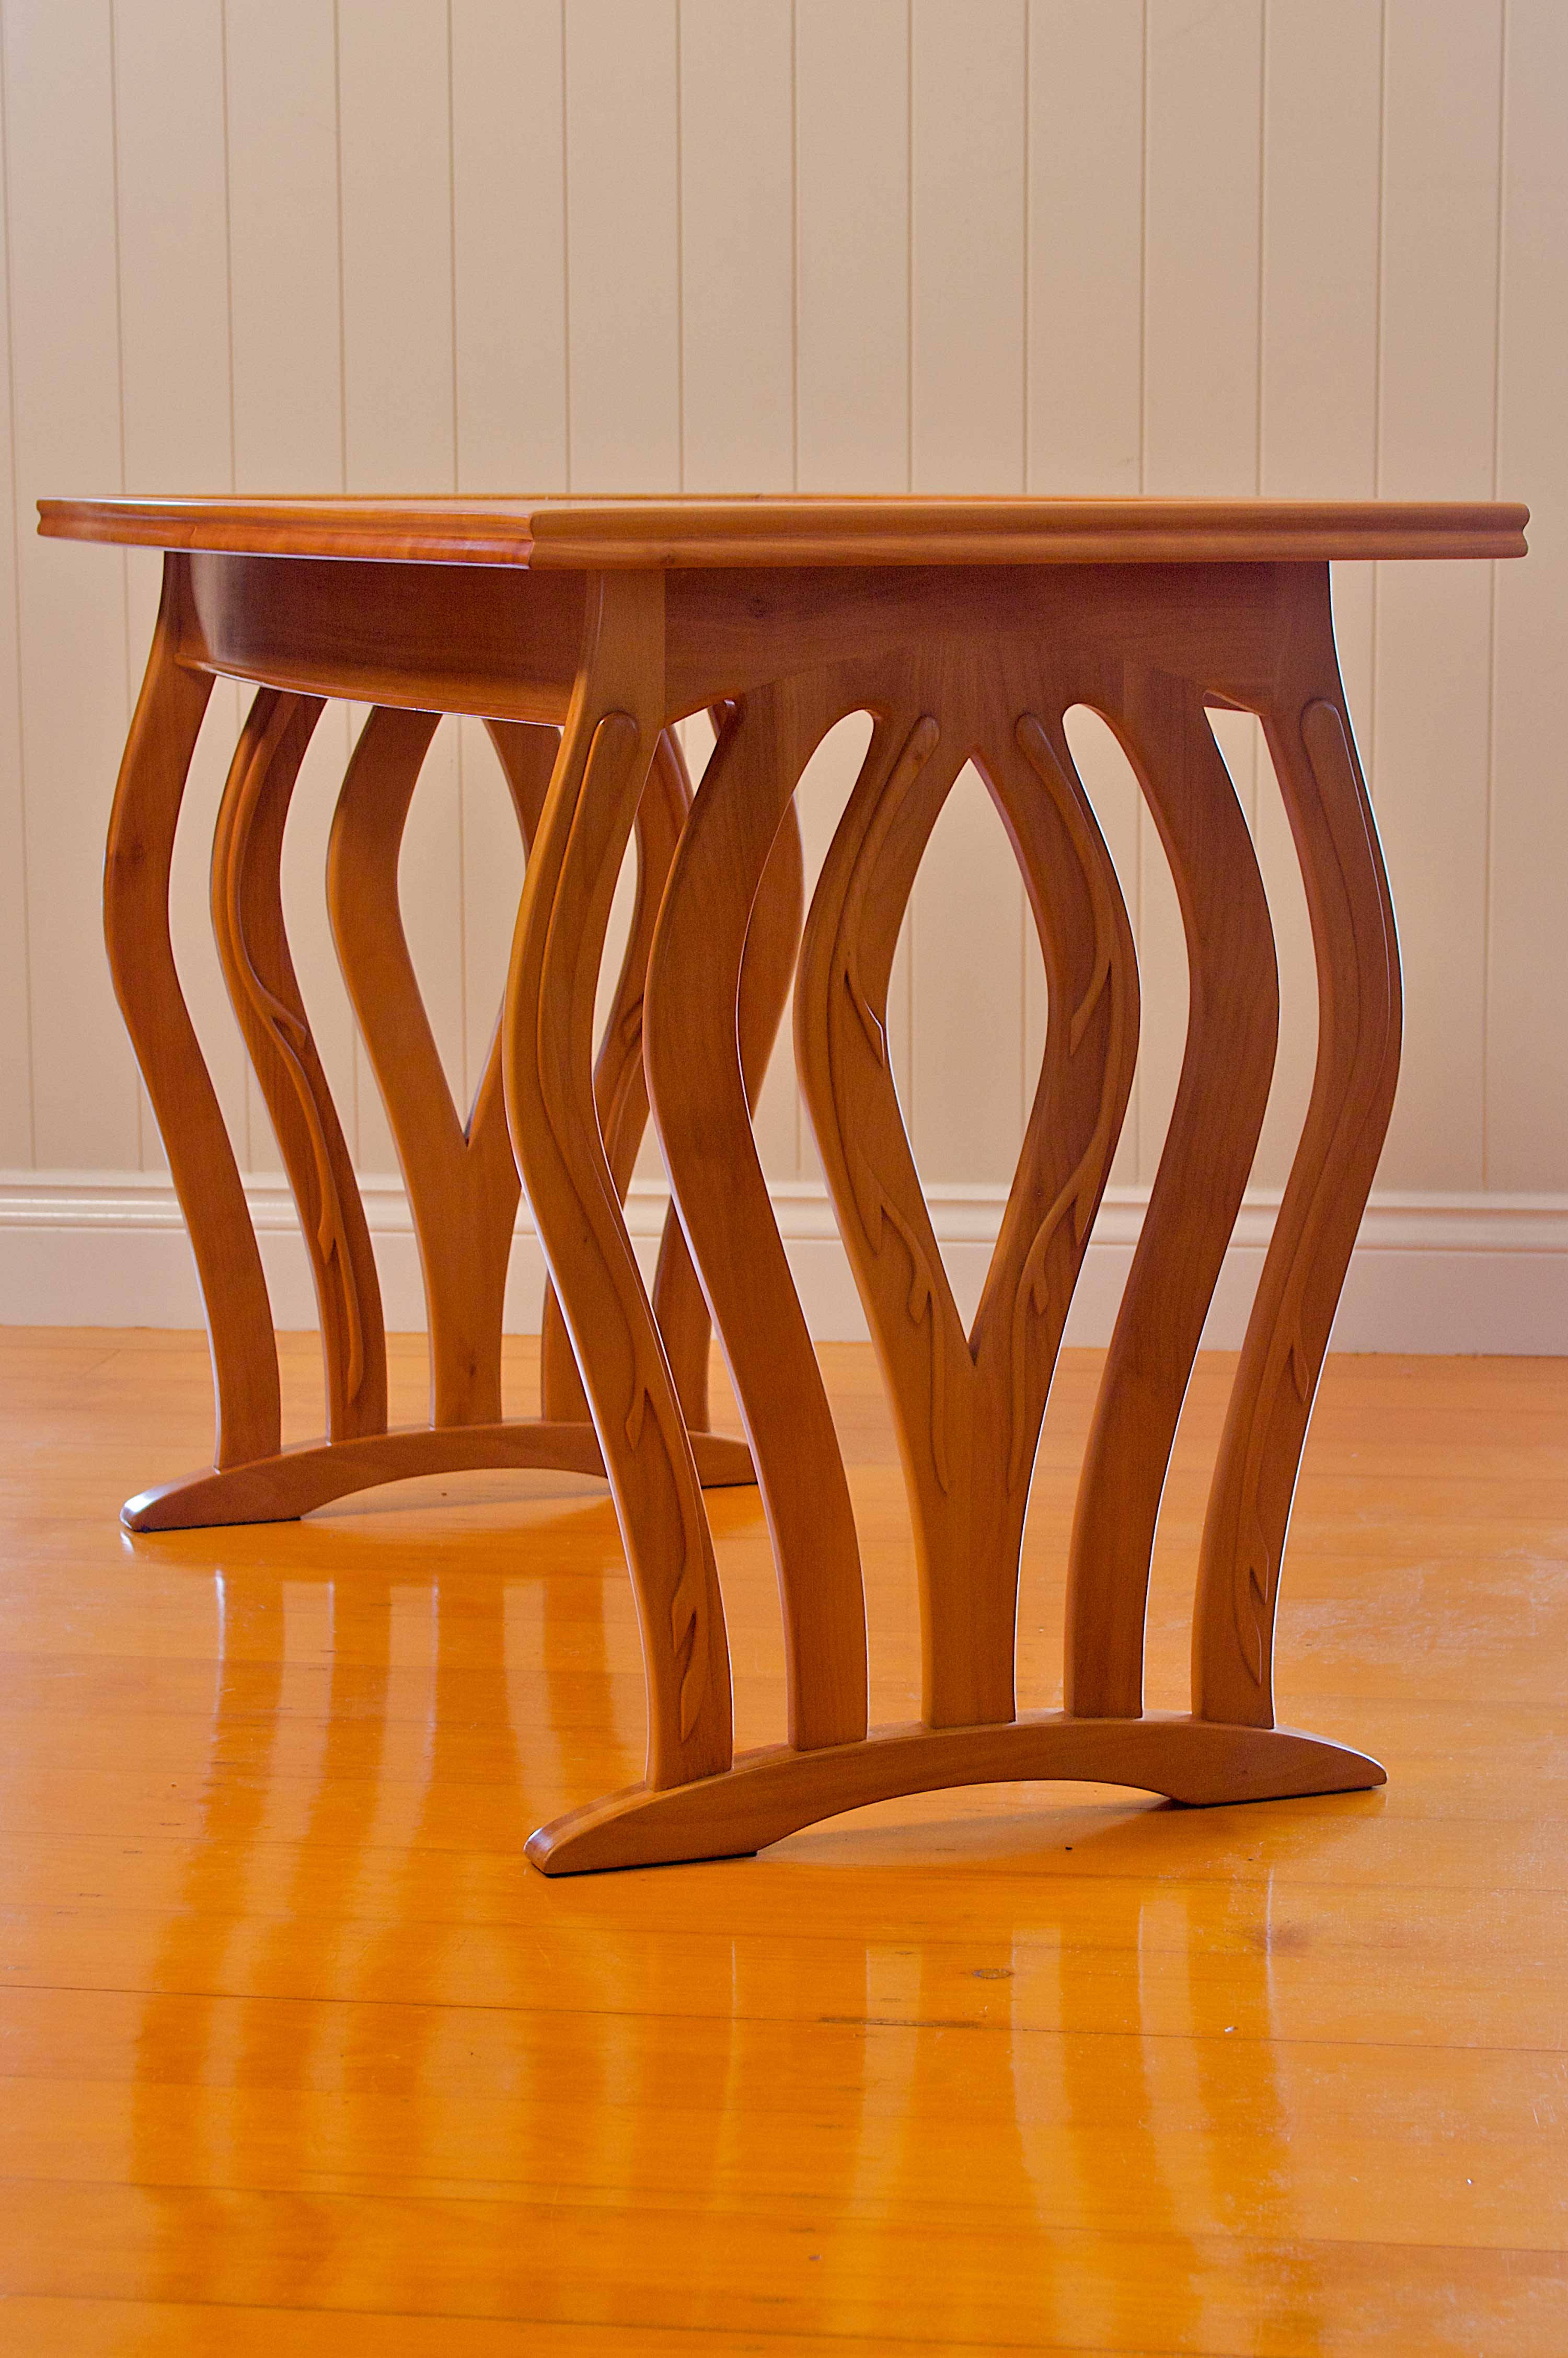 Custom Handmade Wooden Table